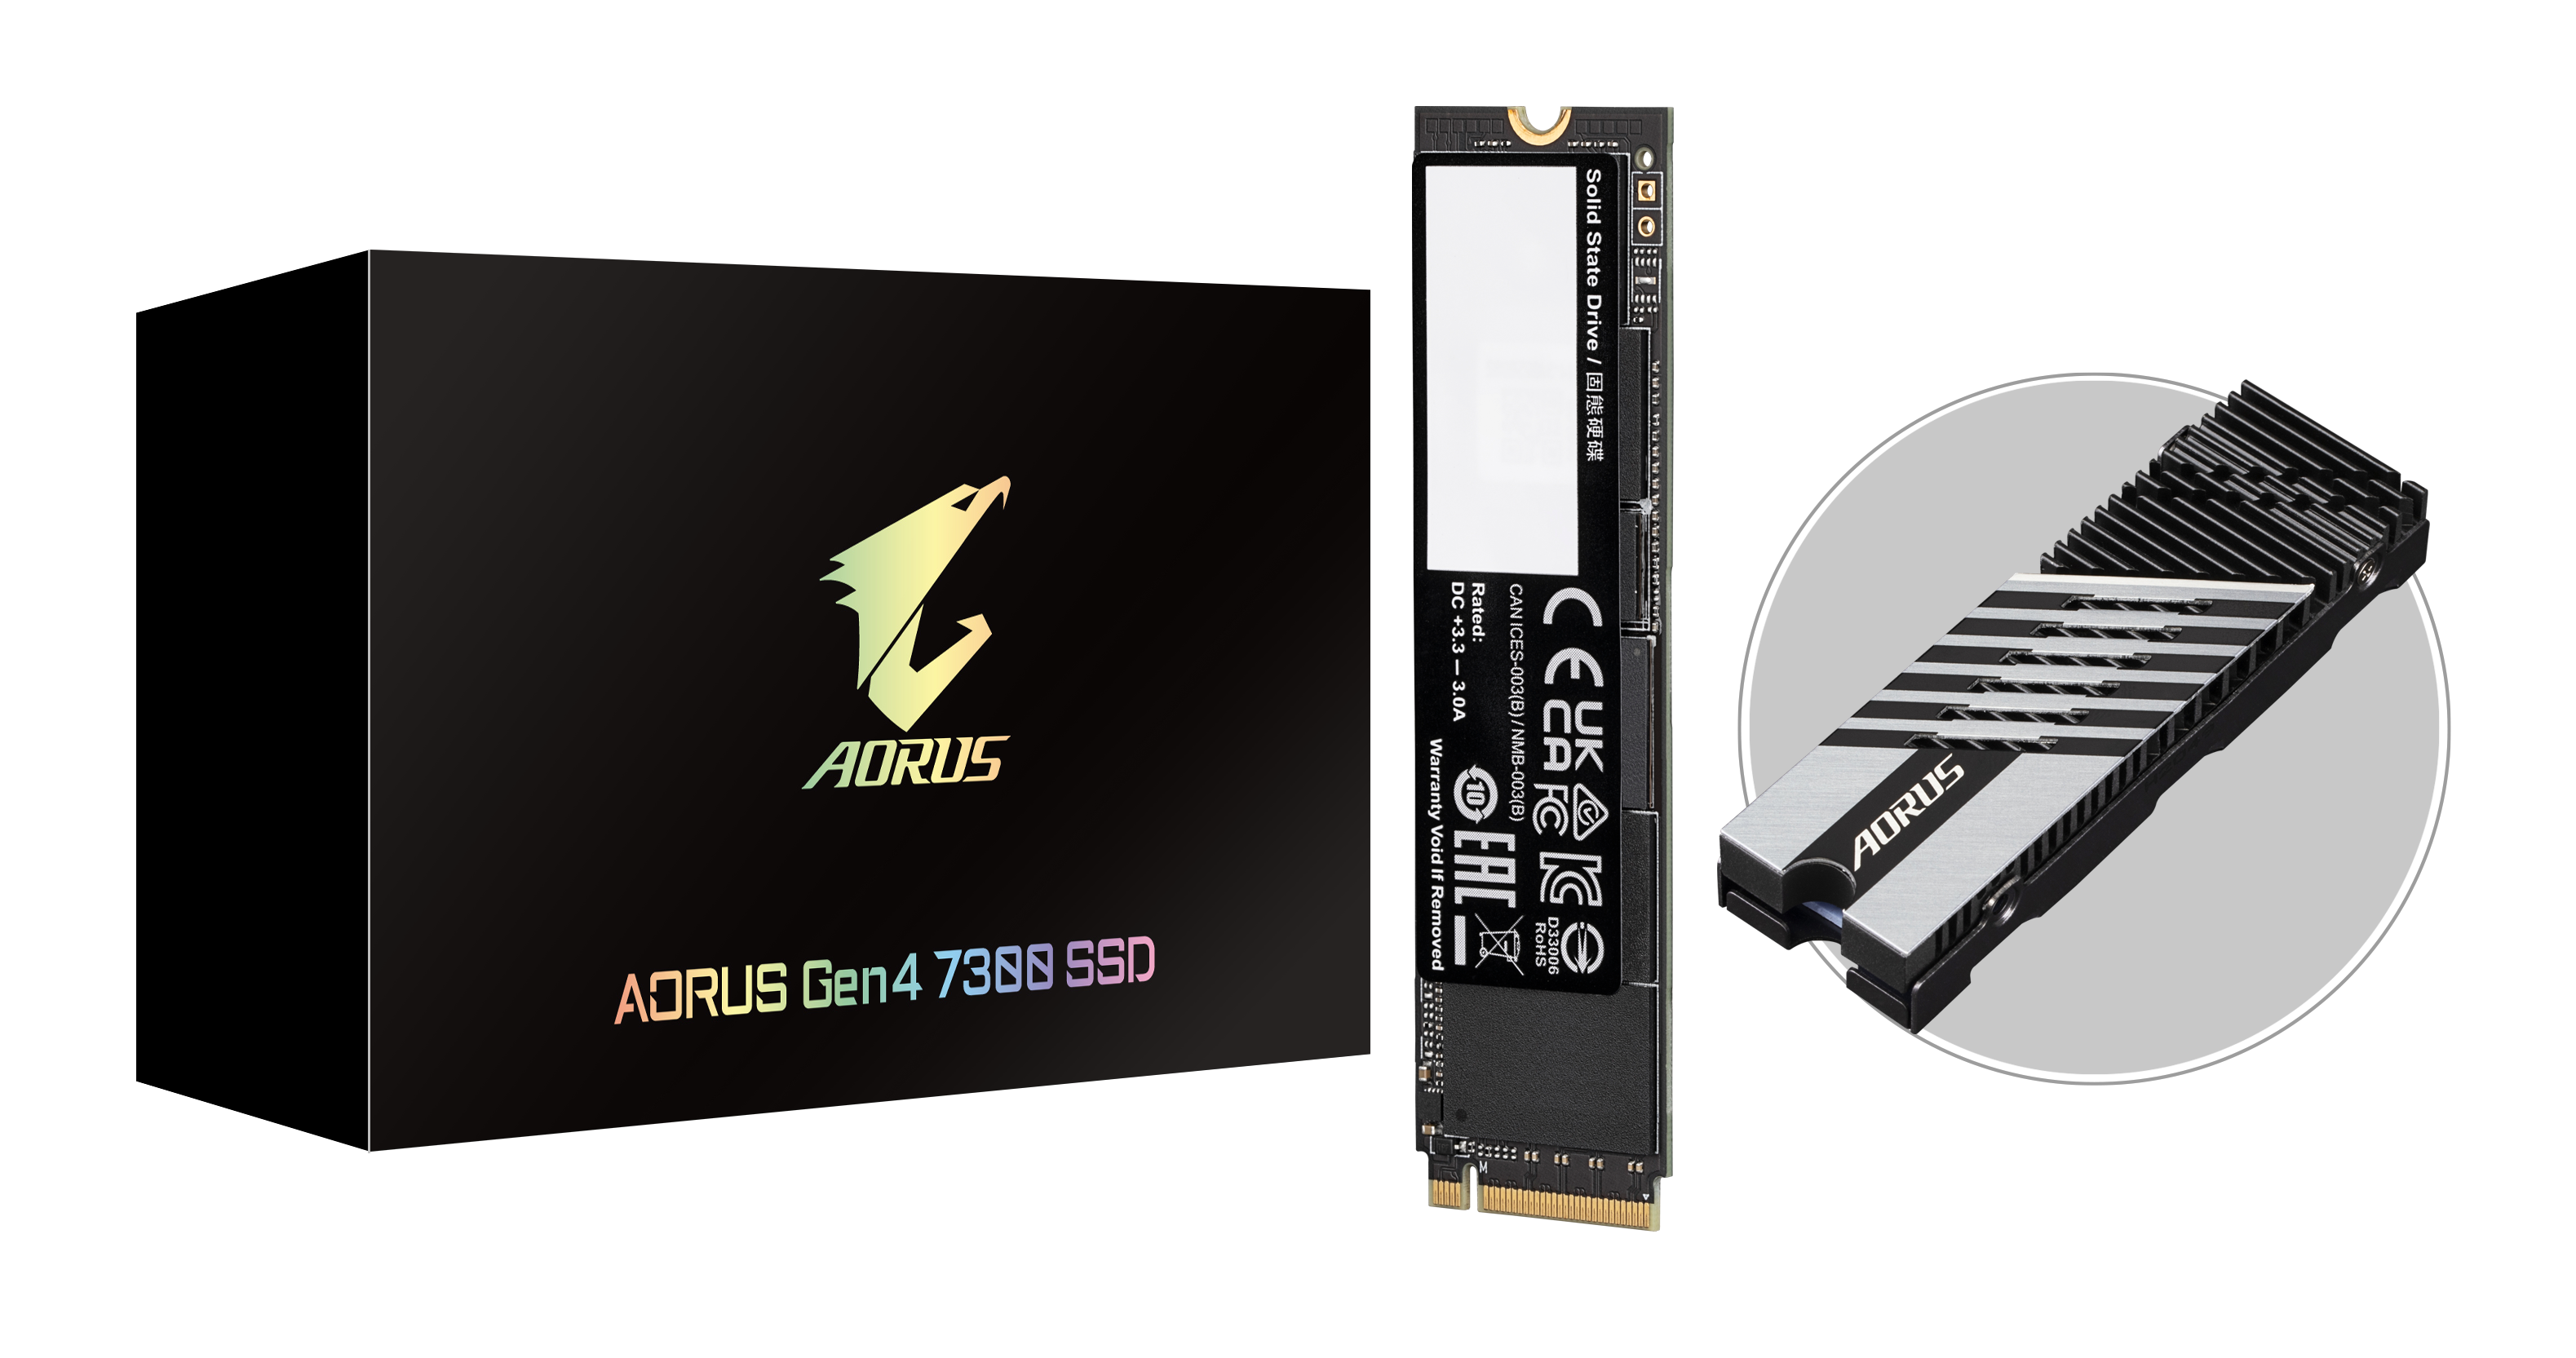 Enjoy the Evolution Speed with AORUS Gen4 7300 SSD!